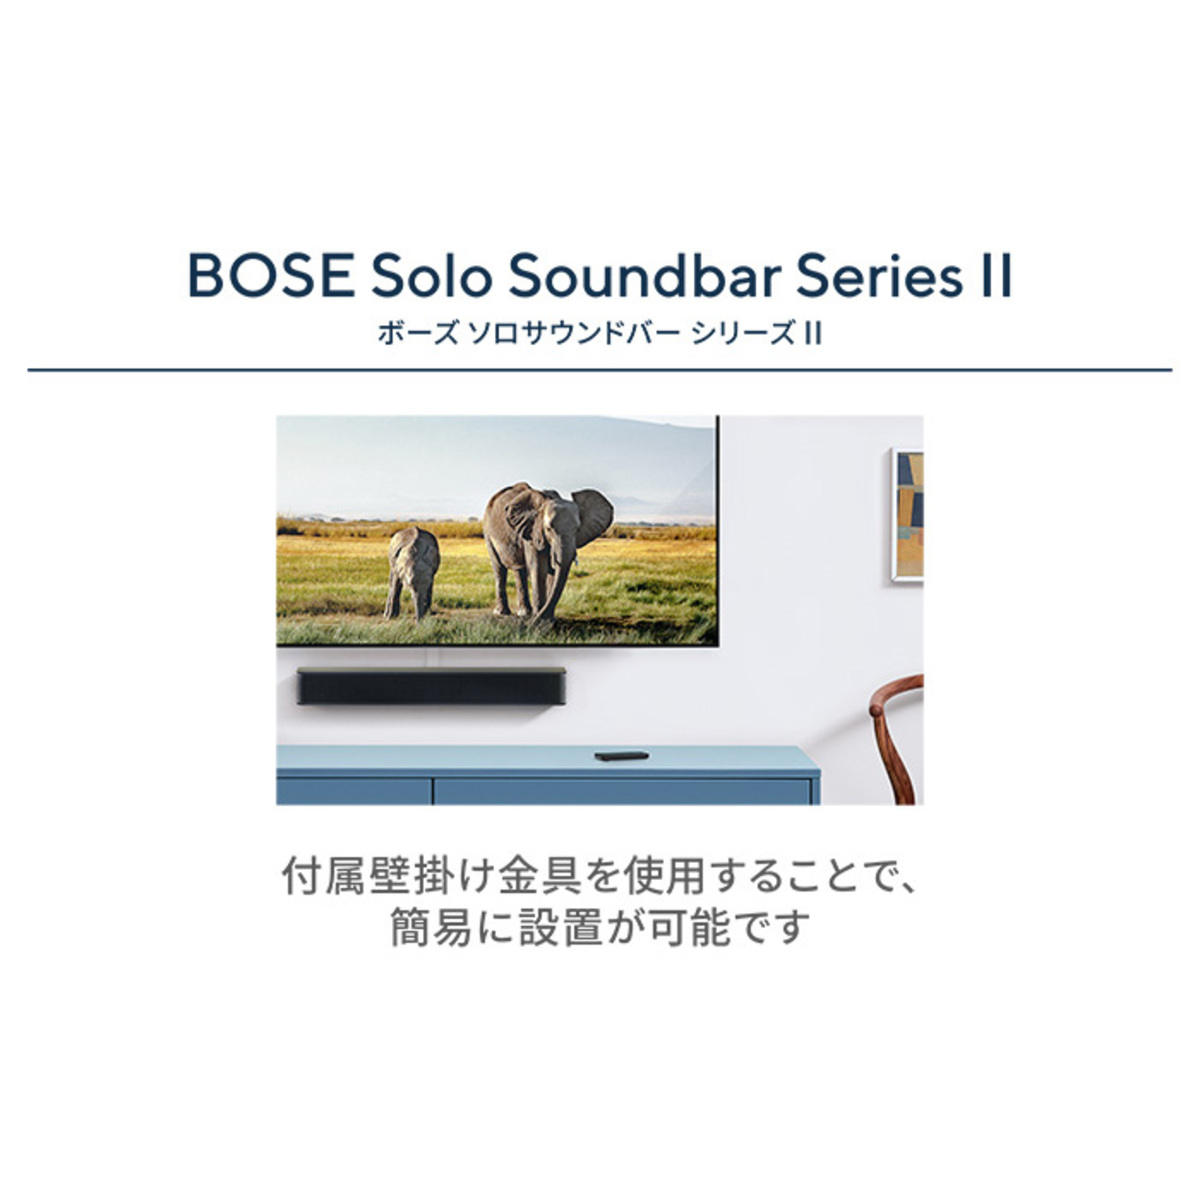 Bose Solo Soundbar Series II ワイヤレスサウンドバー-